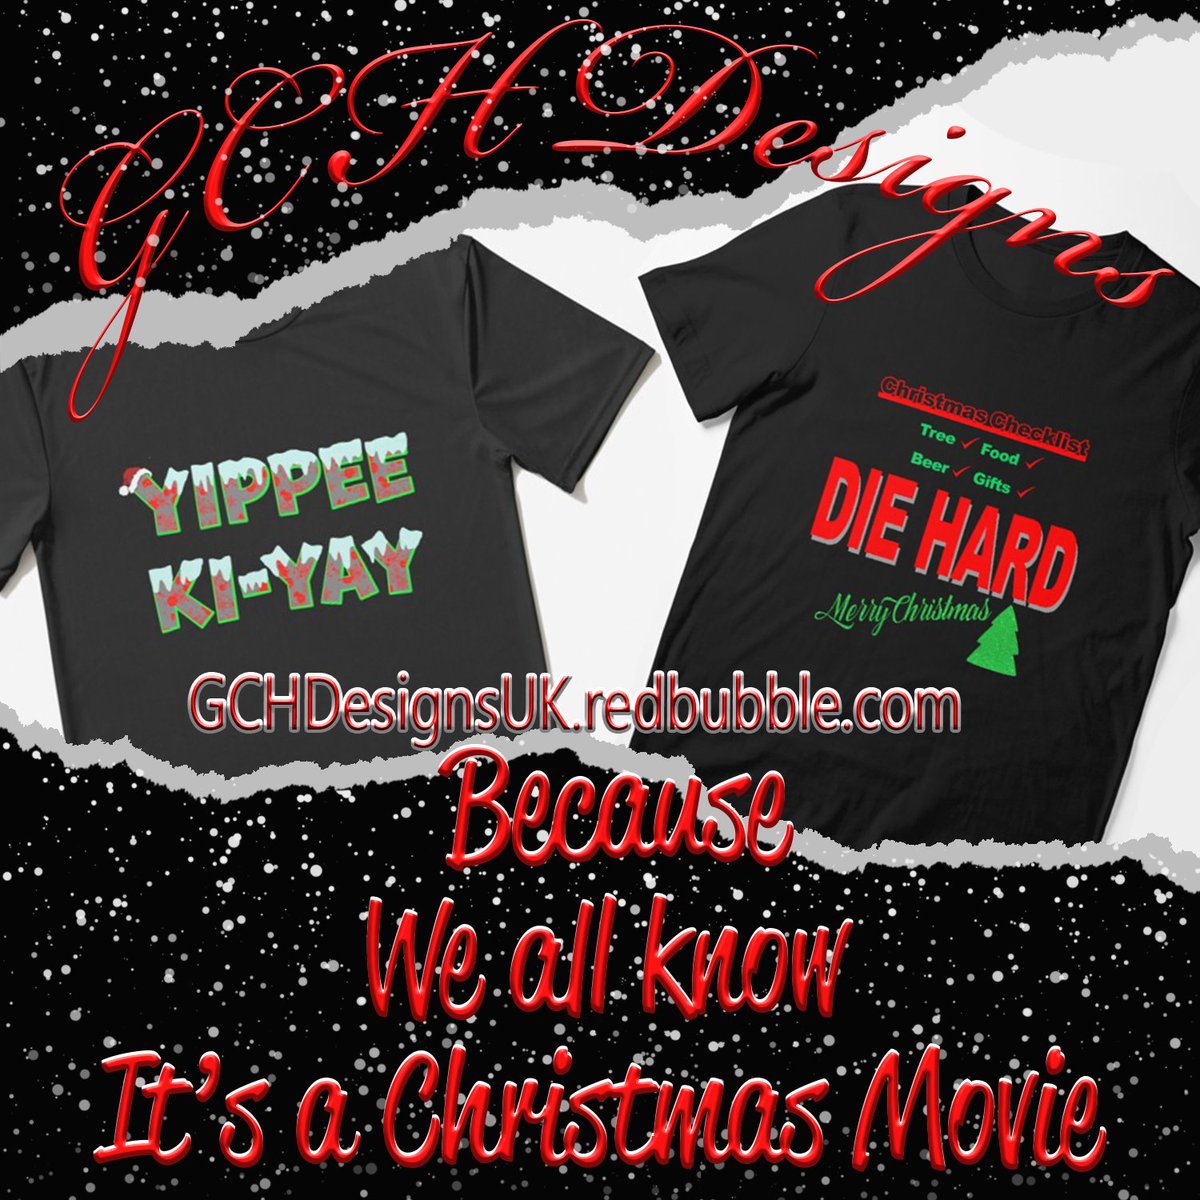 It's not officially #Christmas until #DieHard has been on. 

#ChristmasJumper #tshirts #hoodies #YippeeKiYay #GCHDesigns #New #ChristmasDesigns #festivevibes #SANTA 

redbubble.com/people/gchdesi…